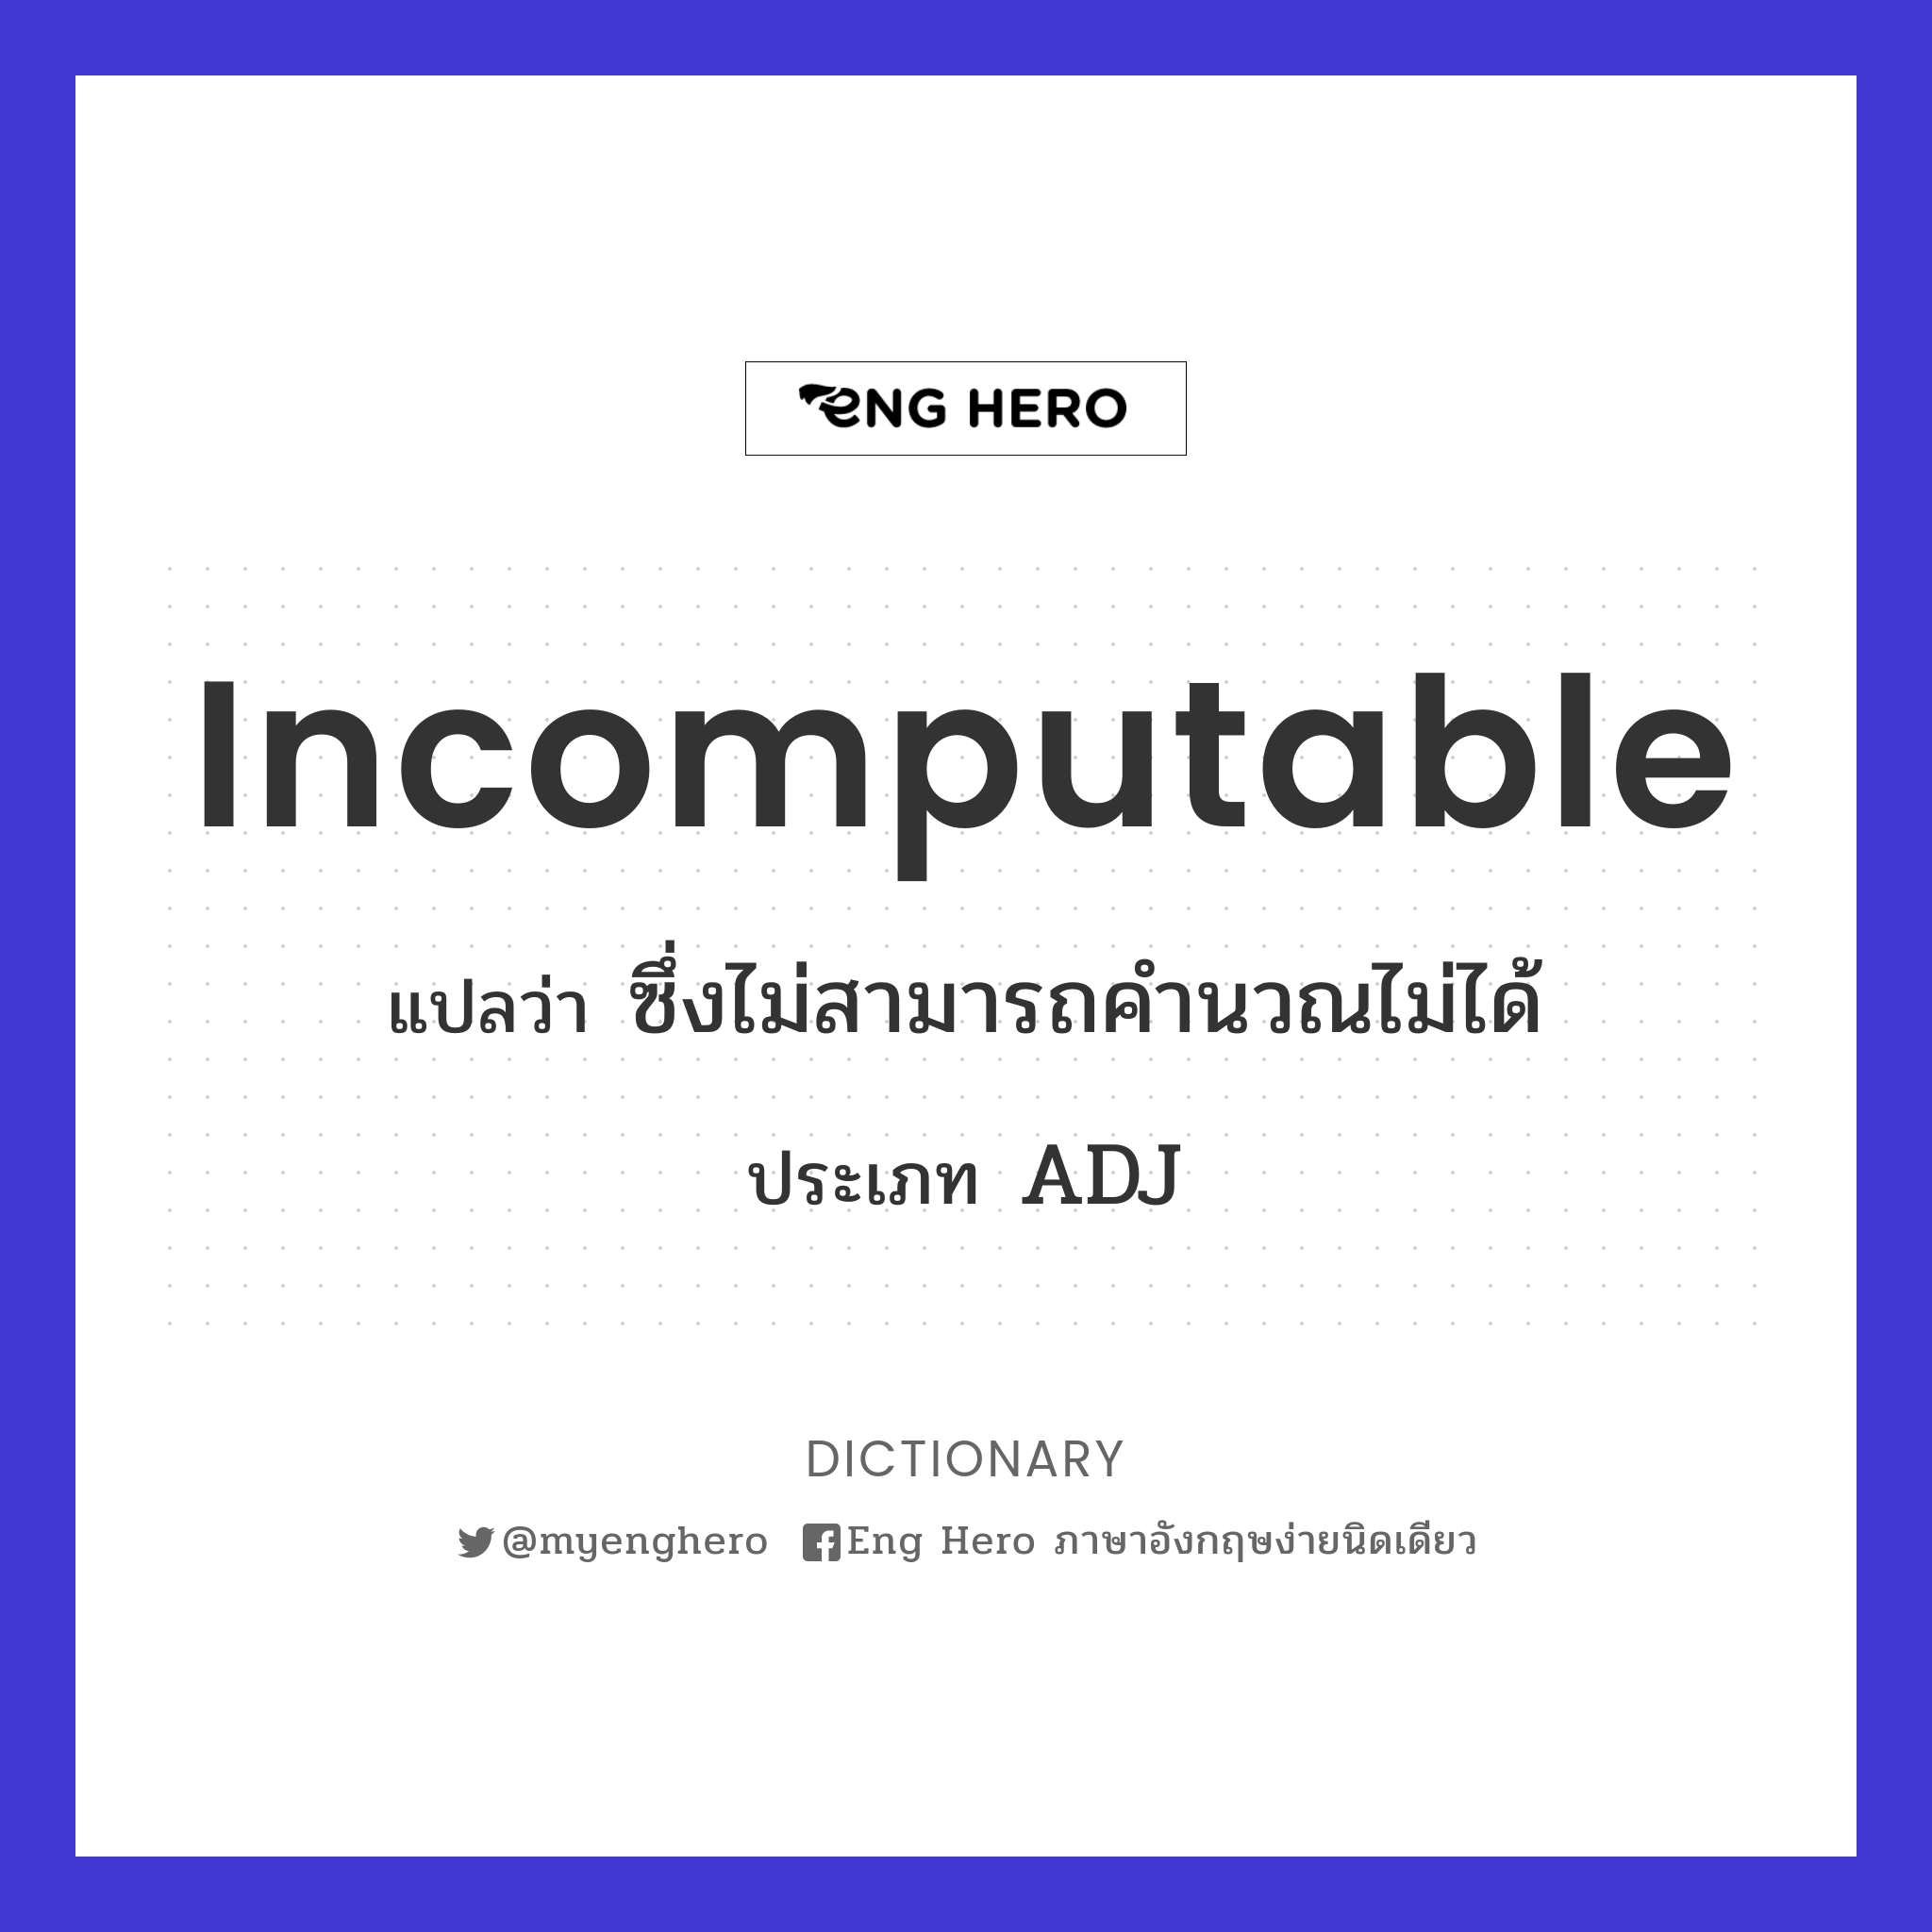 incomputable